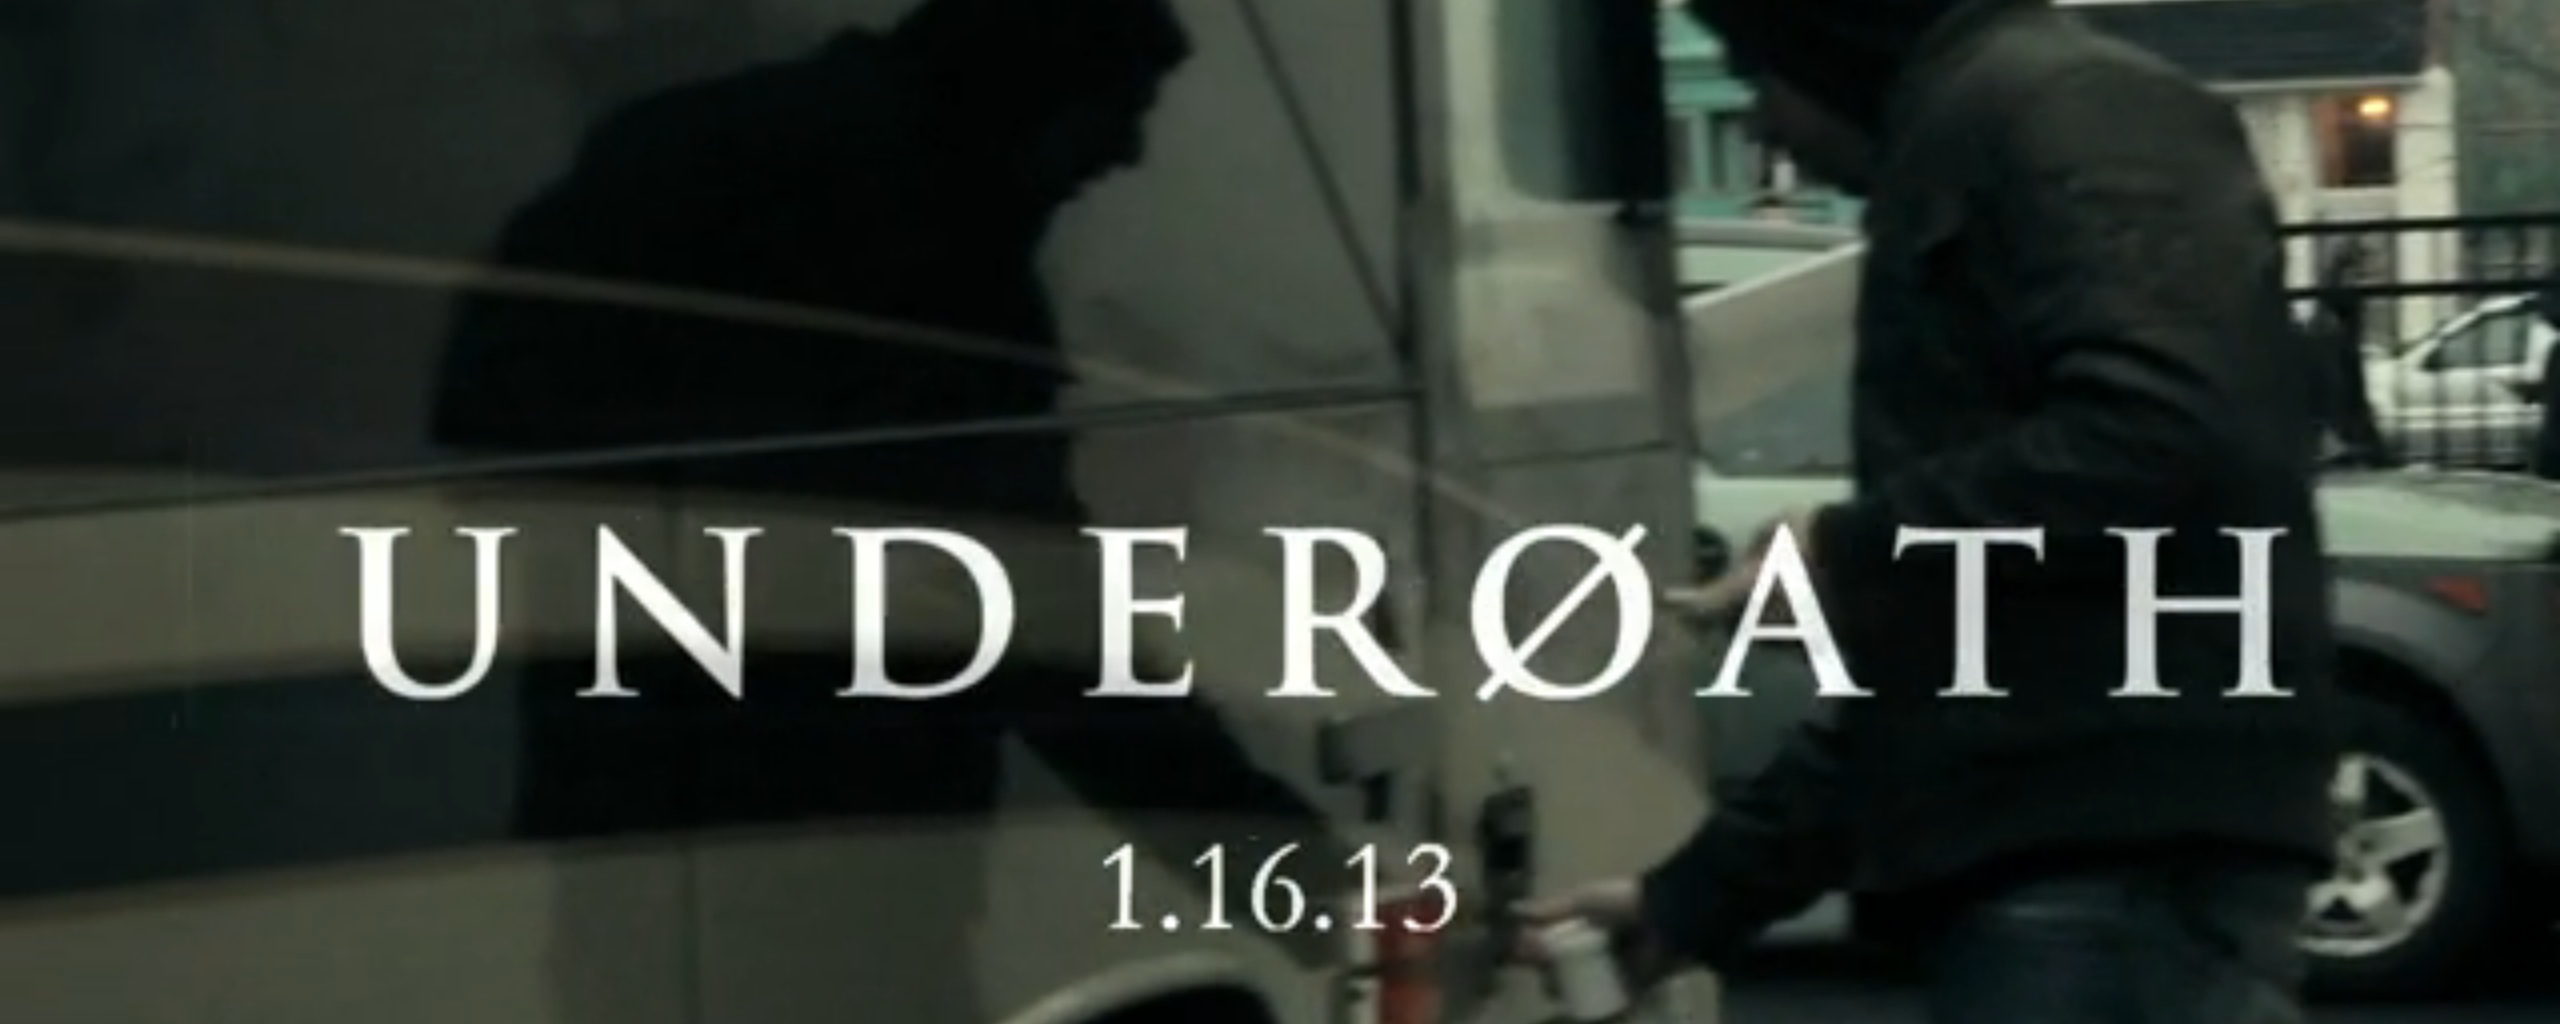 Underoath(アンダーオース) 解散 | フェアウェルツアー最新映像トレーラー公開